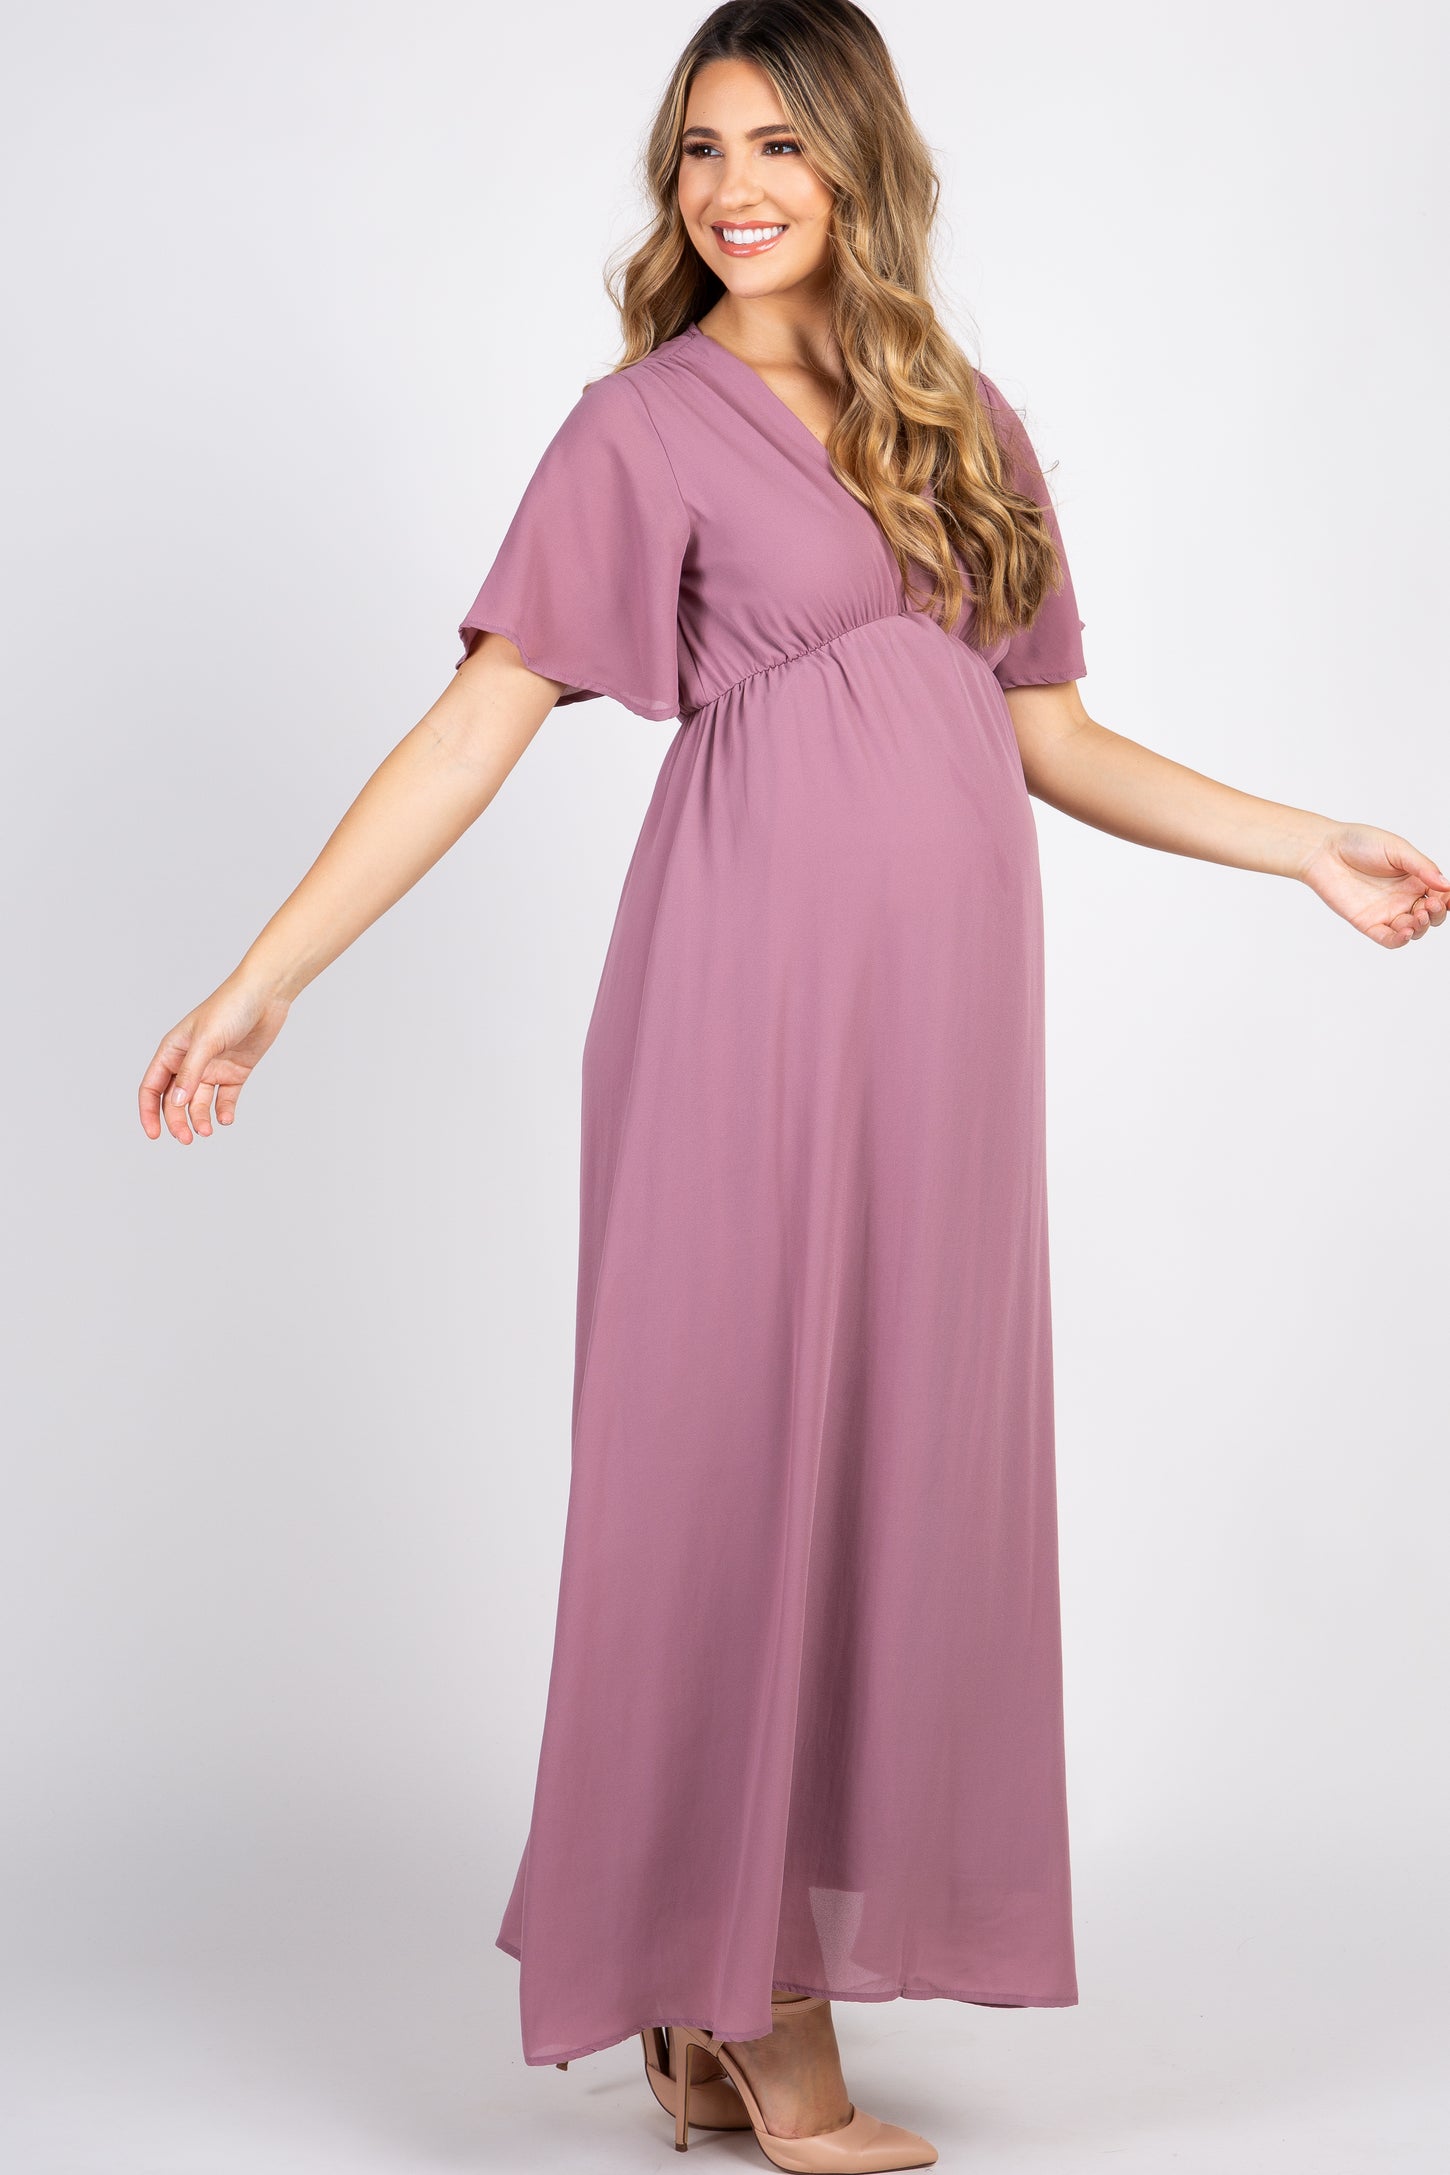 Dark Mauve Chiffon Bell Sleeve Maternity Maxi Dress